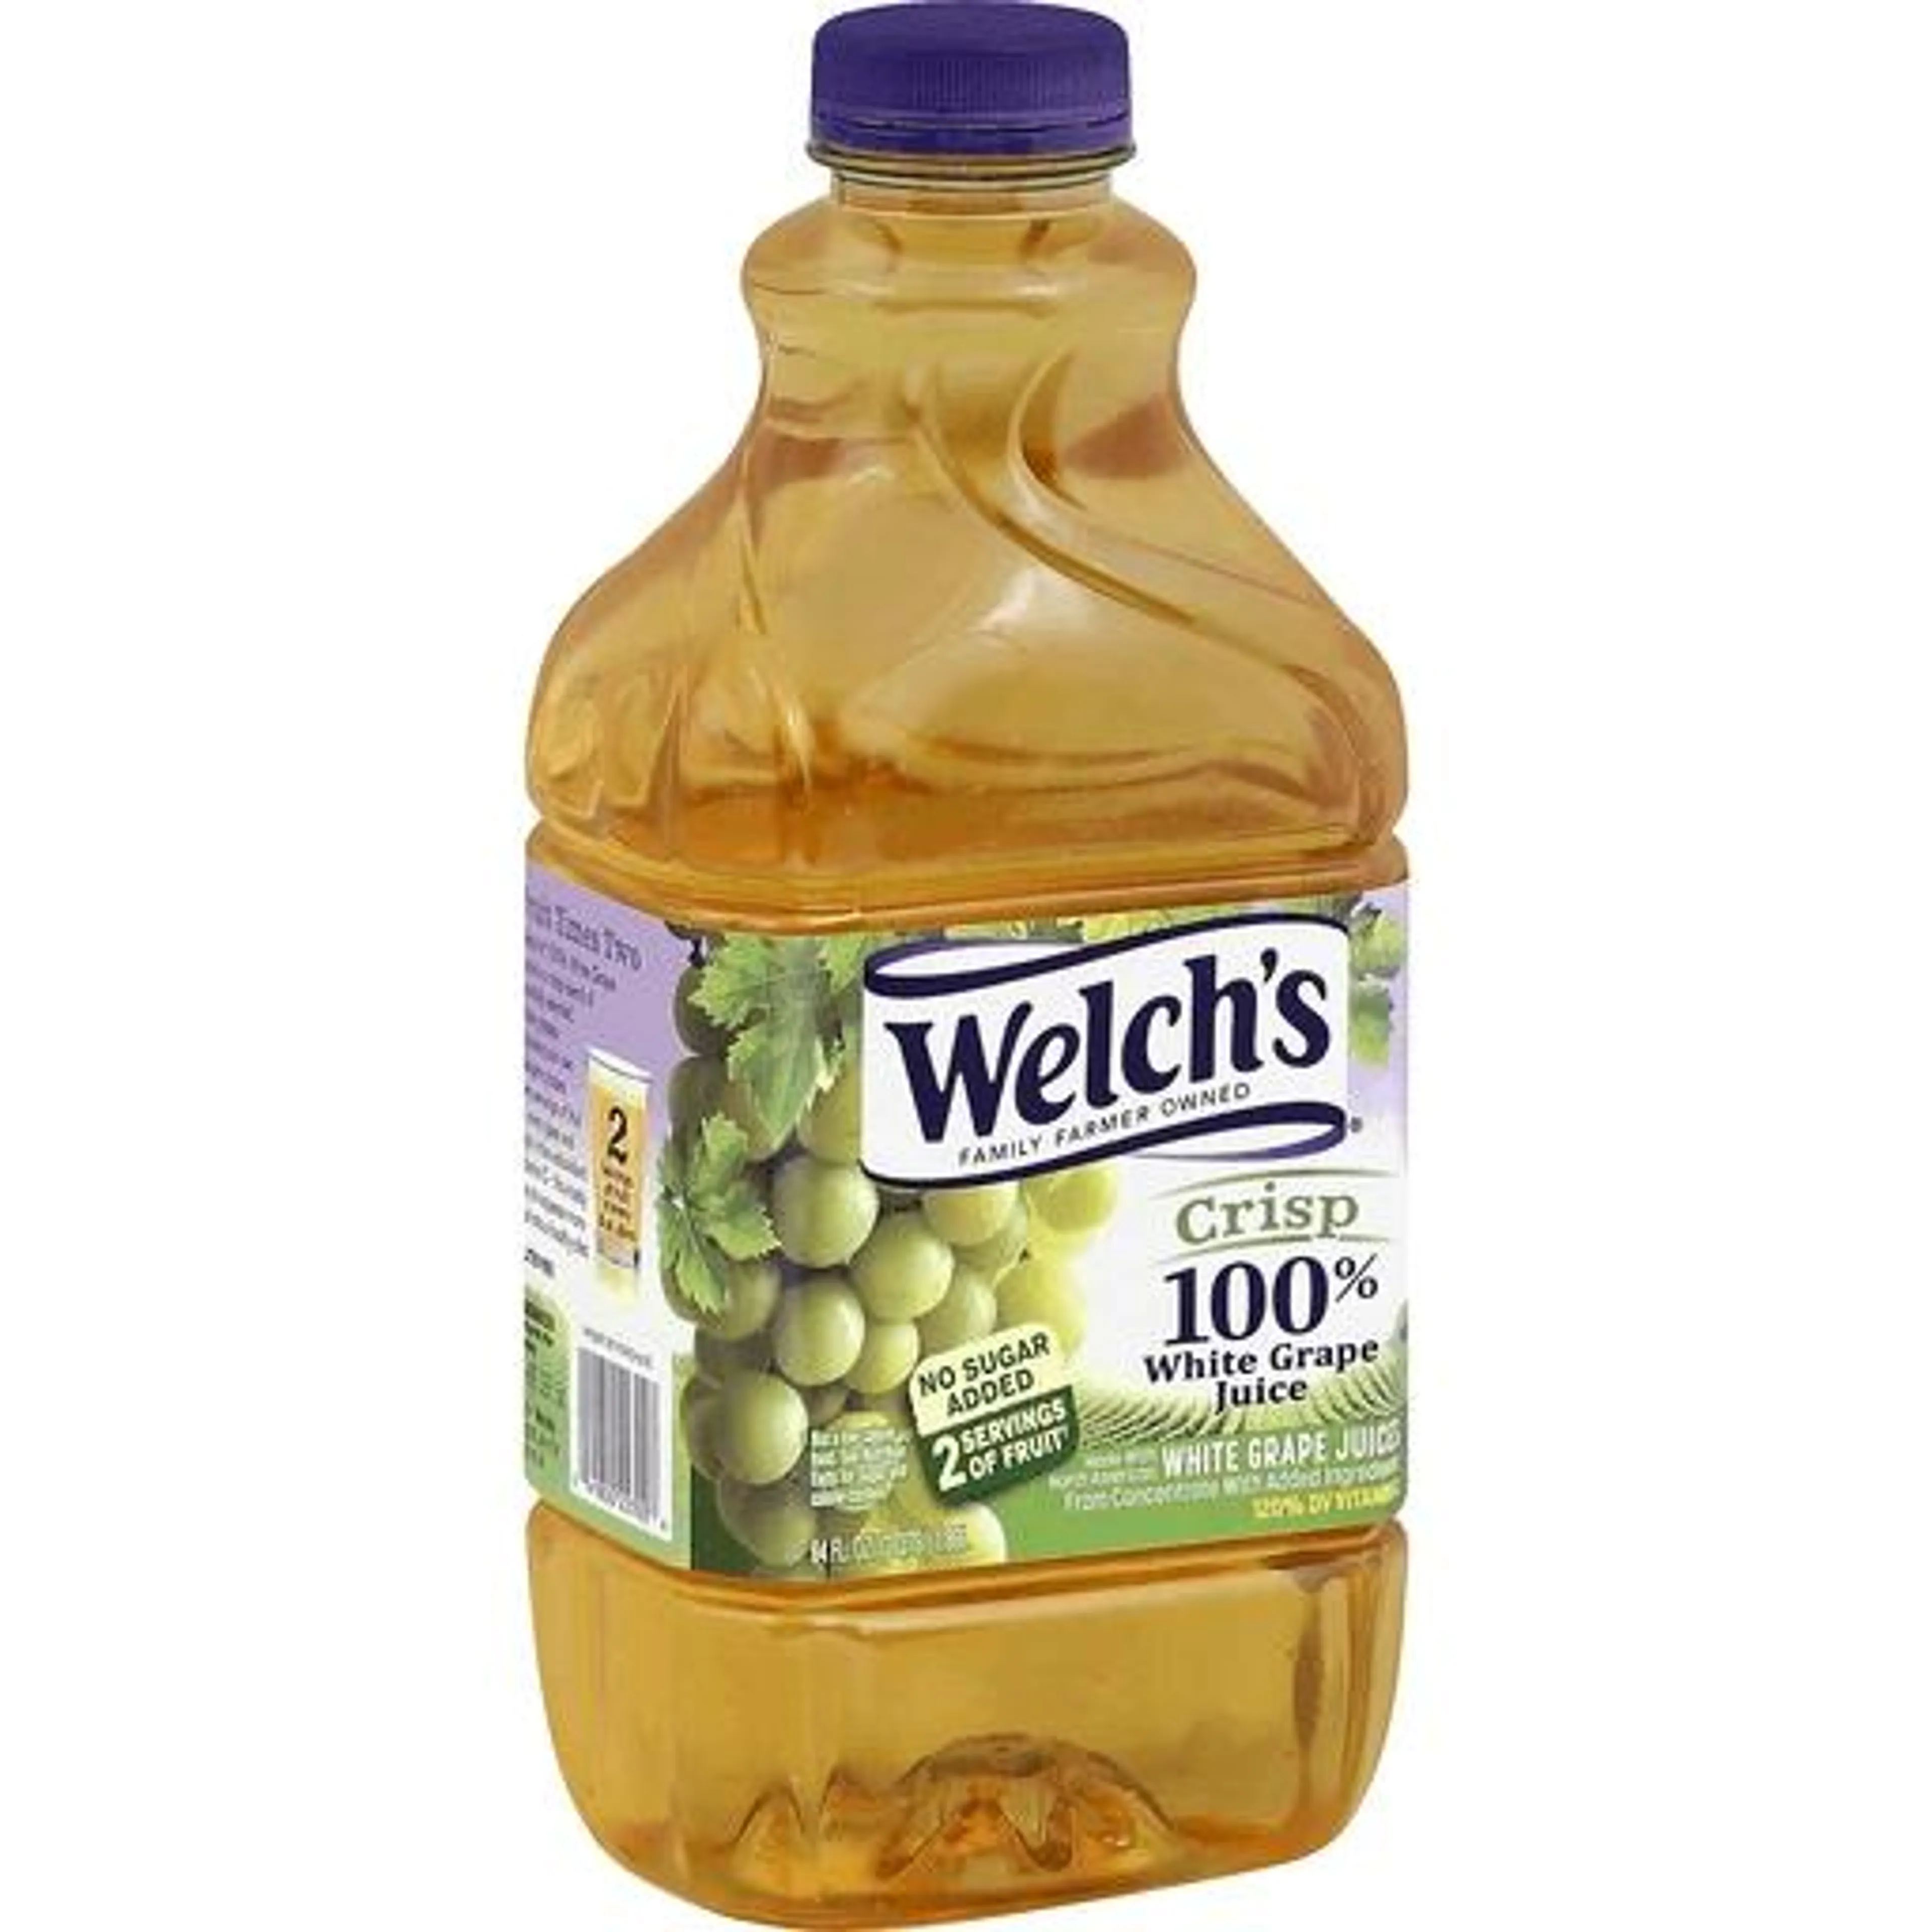 Welchs 100% Juice, White Grape